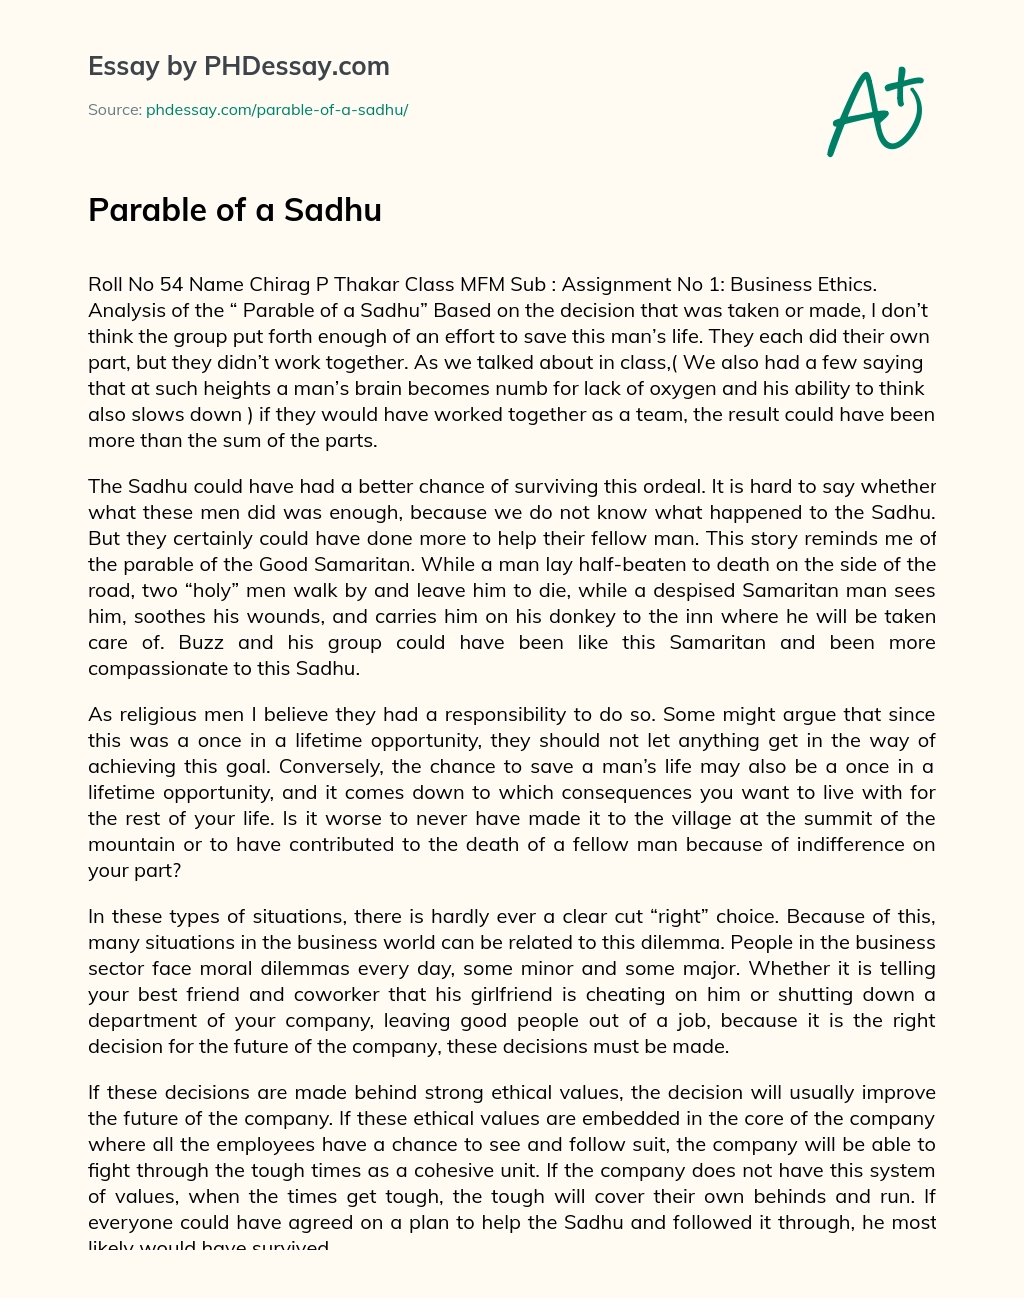 Parable of a Sadhu essay